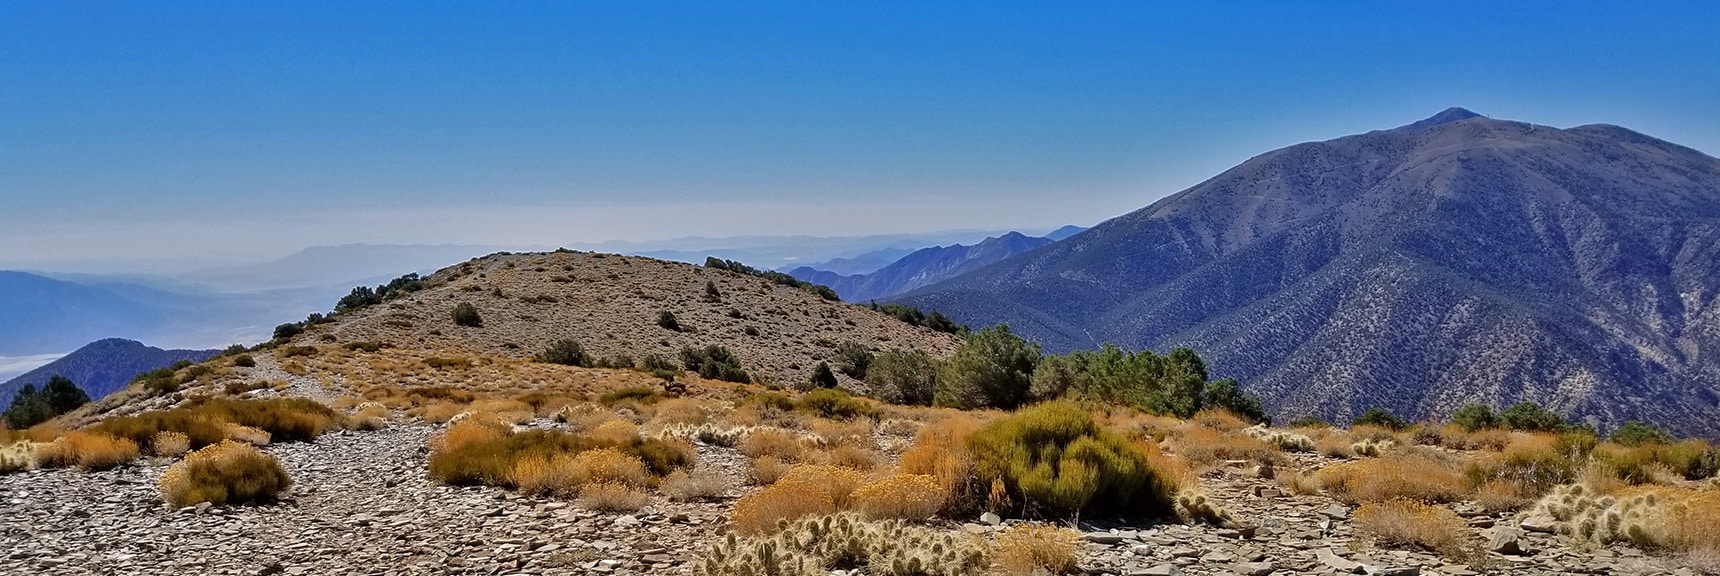 View of South Summit, Rogers, Bennett and Telescope Peaks from Wildrose Peak Mid Summit Area | Wildrose Peak | Panamint Mountain Range | Death Valley National Park, California